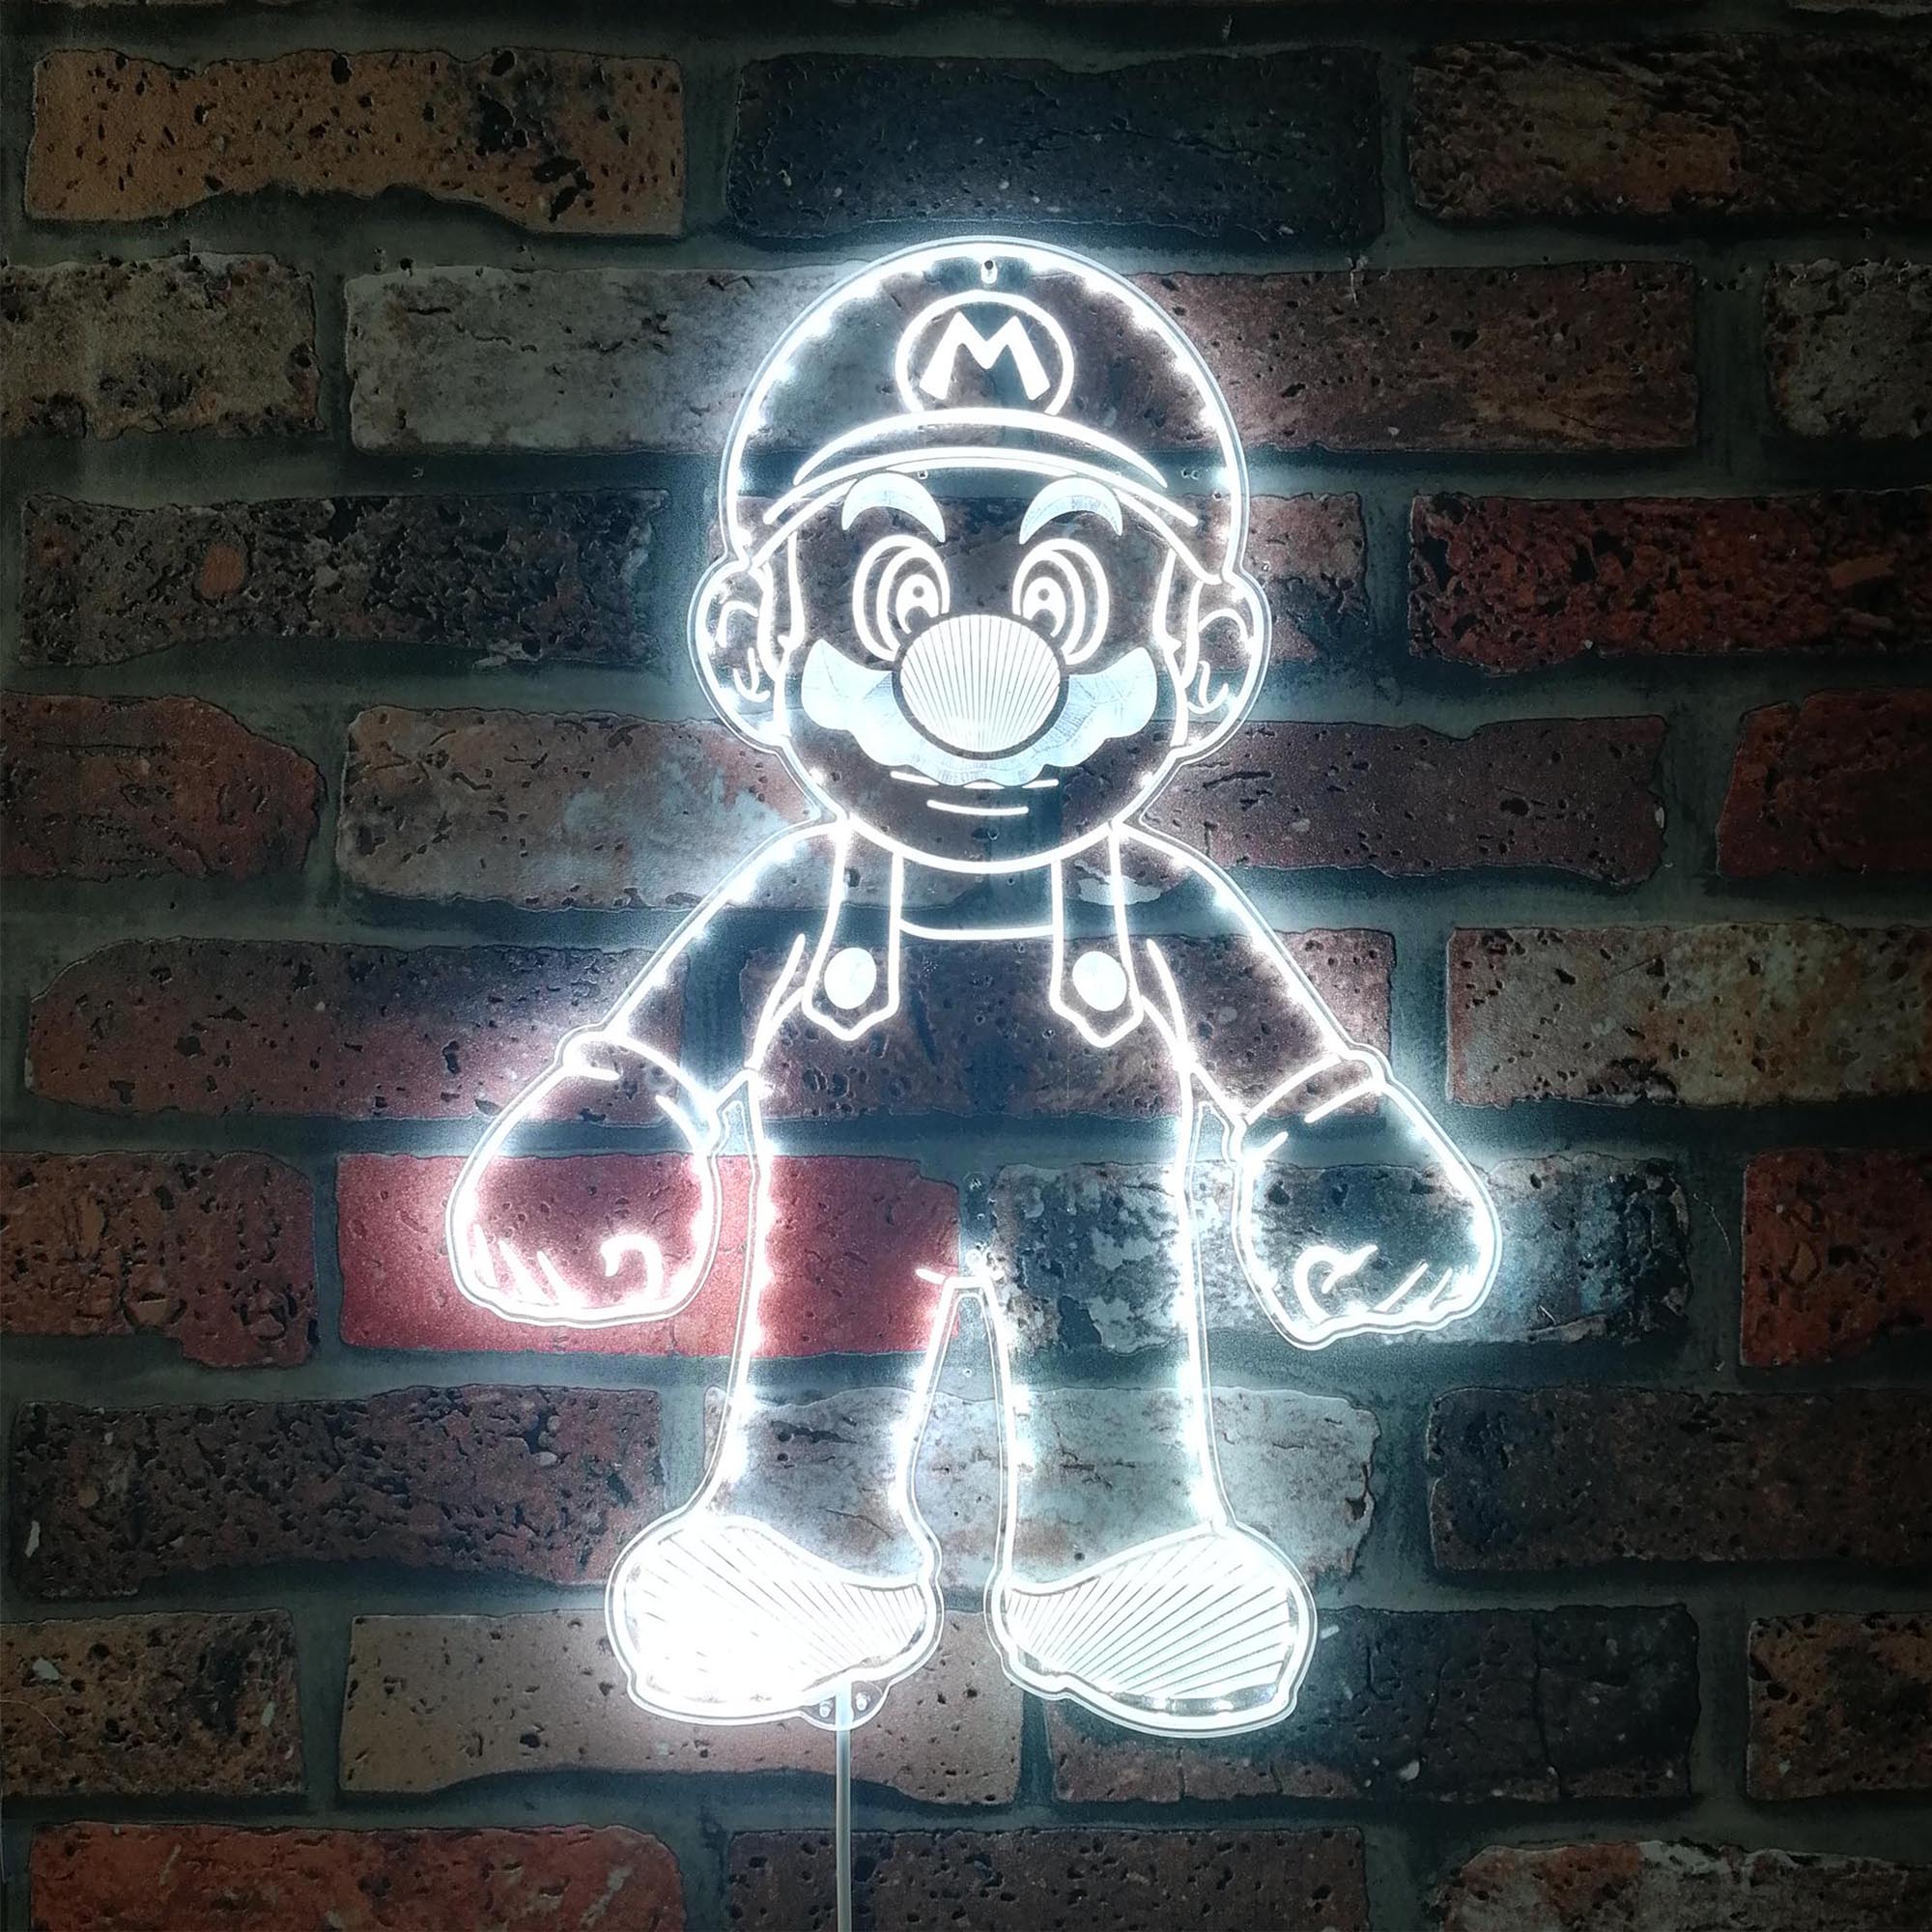 Super Mario Dynamic RGB Edge Lit LED Sign